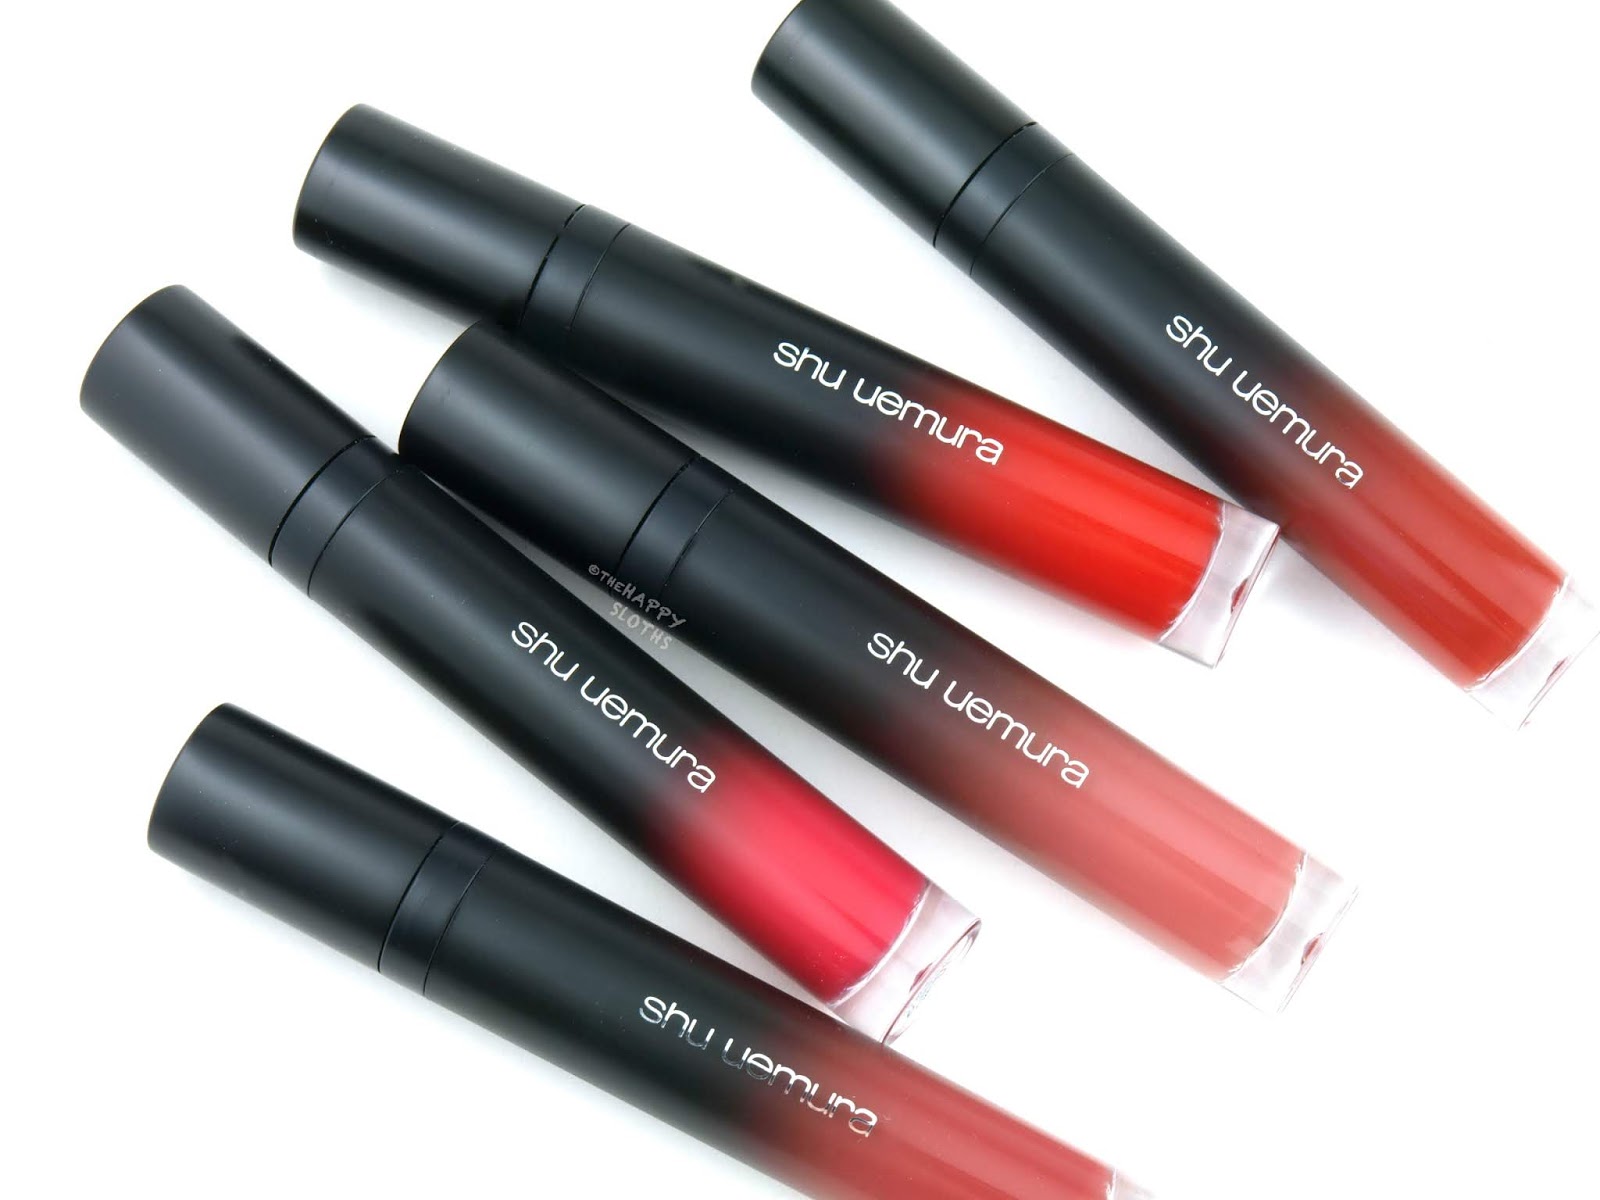 Shu Uemura | Matte Supreme Lip Color: Review and Swatches